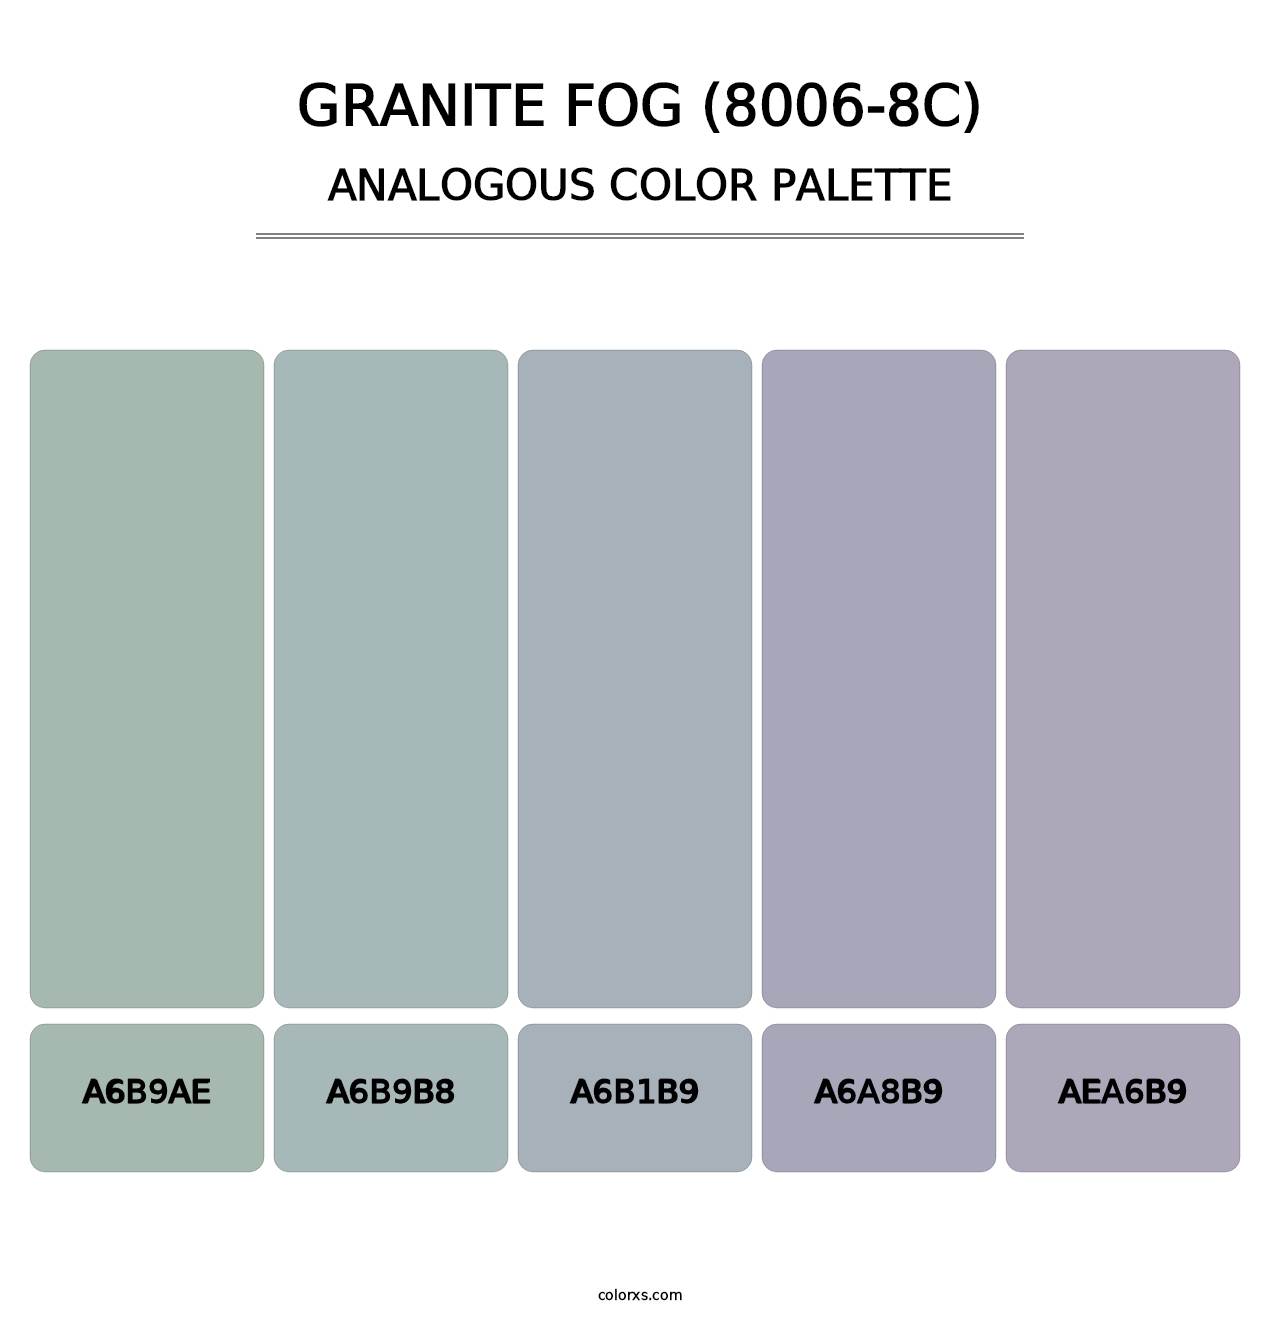 Granite Fog (8006-8C) - Analogous Color Palette